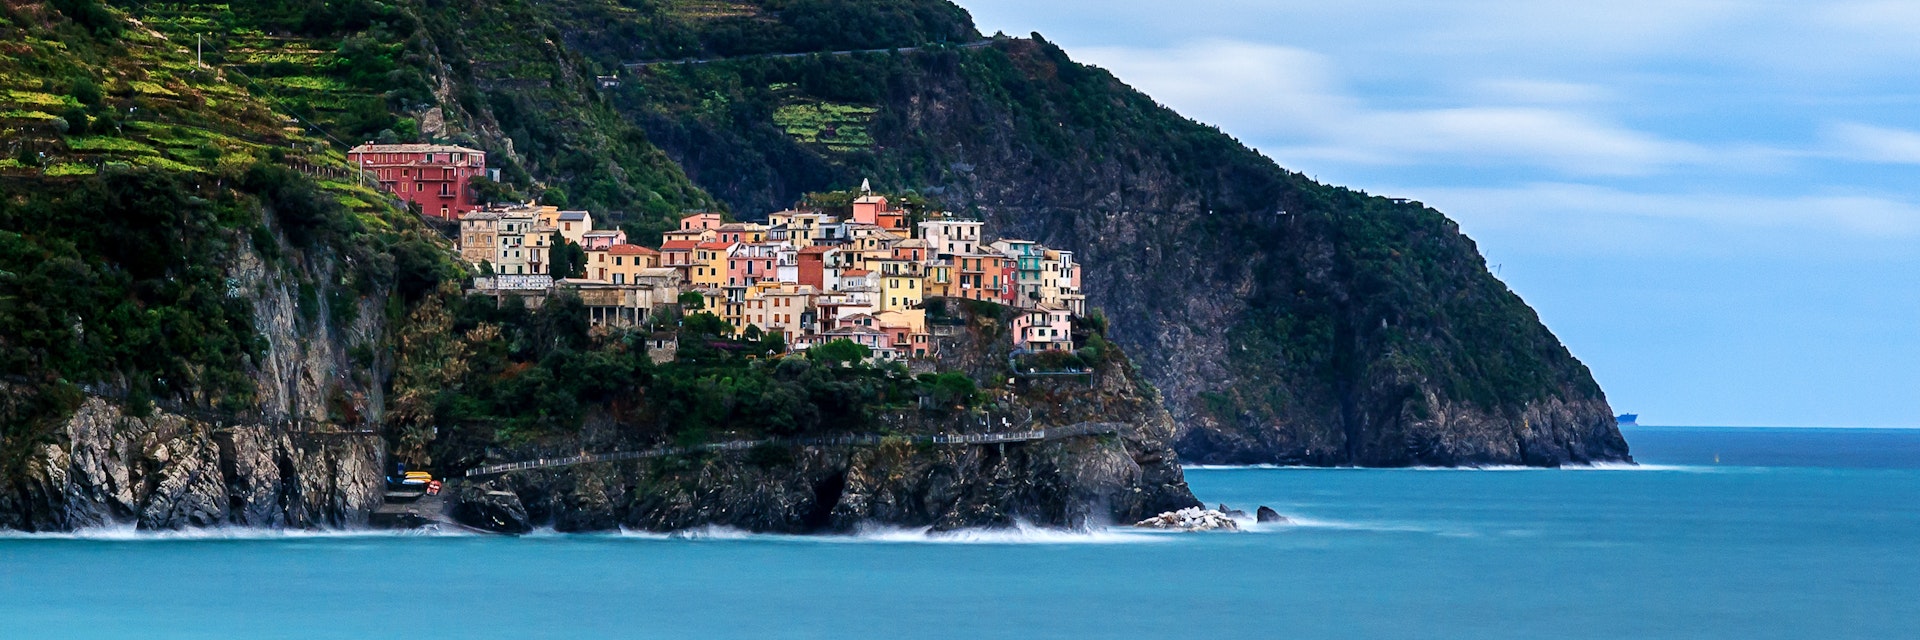 Long exposure of Corniglia in Cinque Terre, Italy